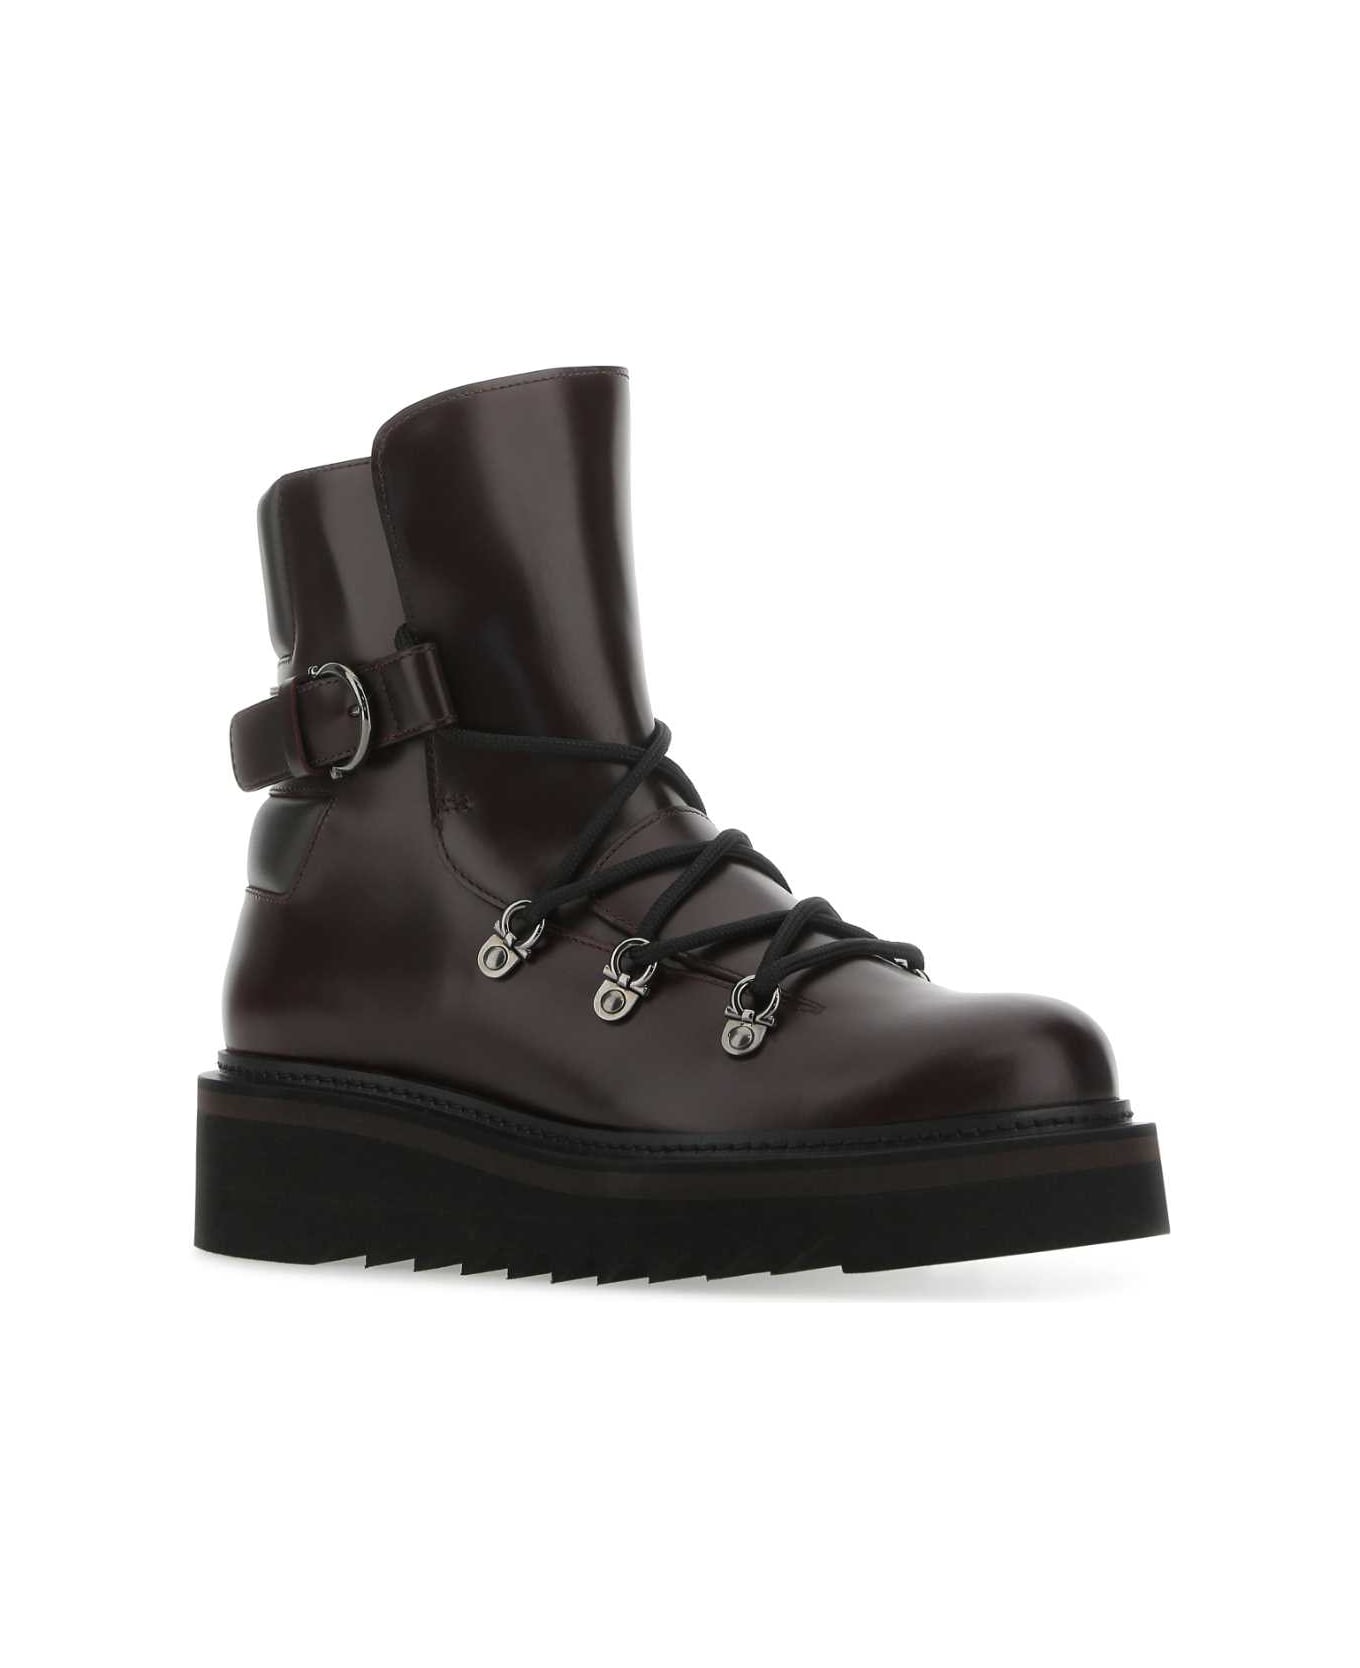 Ferragamo Aubergine Leather Elimo Ankle Boots - GANACHEBROWN ブーツ